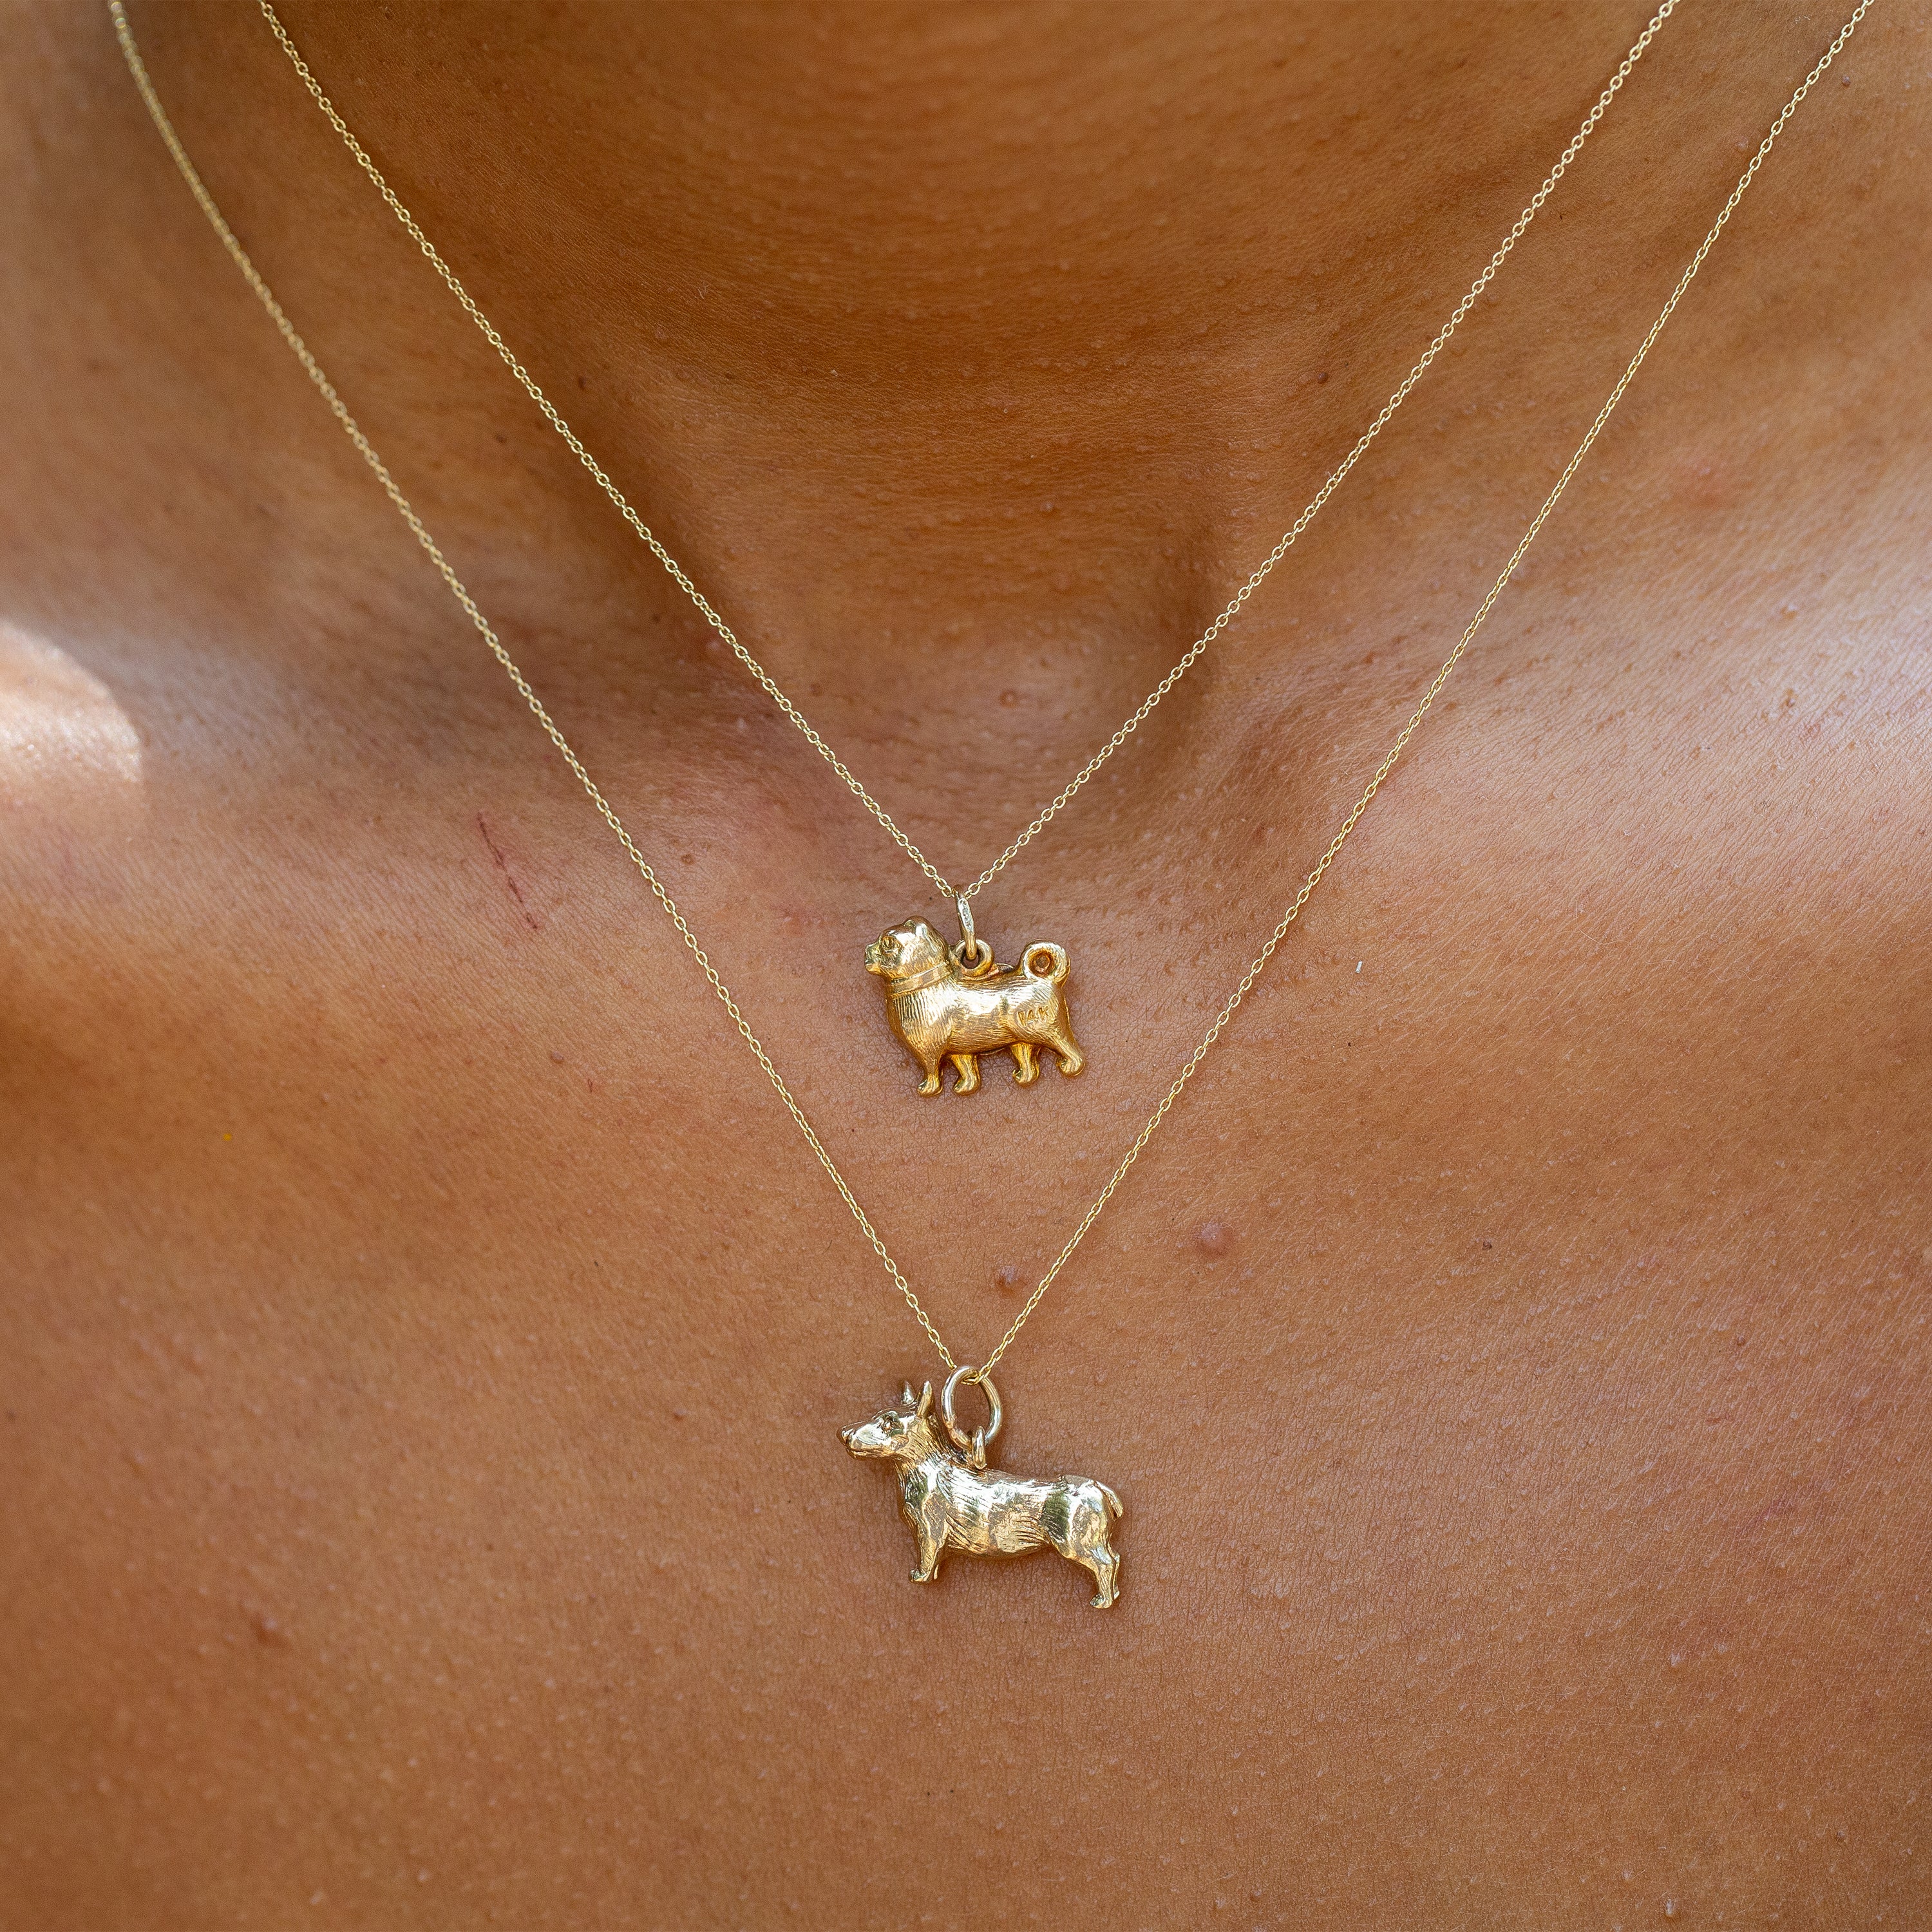 Stainless Steel Collar Golden Chain Dog Collar Pet Dog Necklace Cuban Chain  | eBay